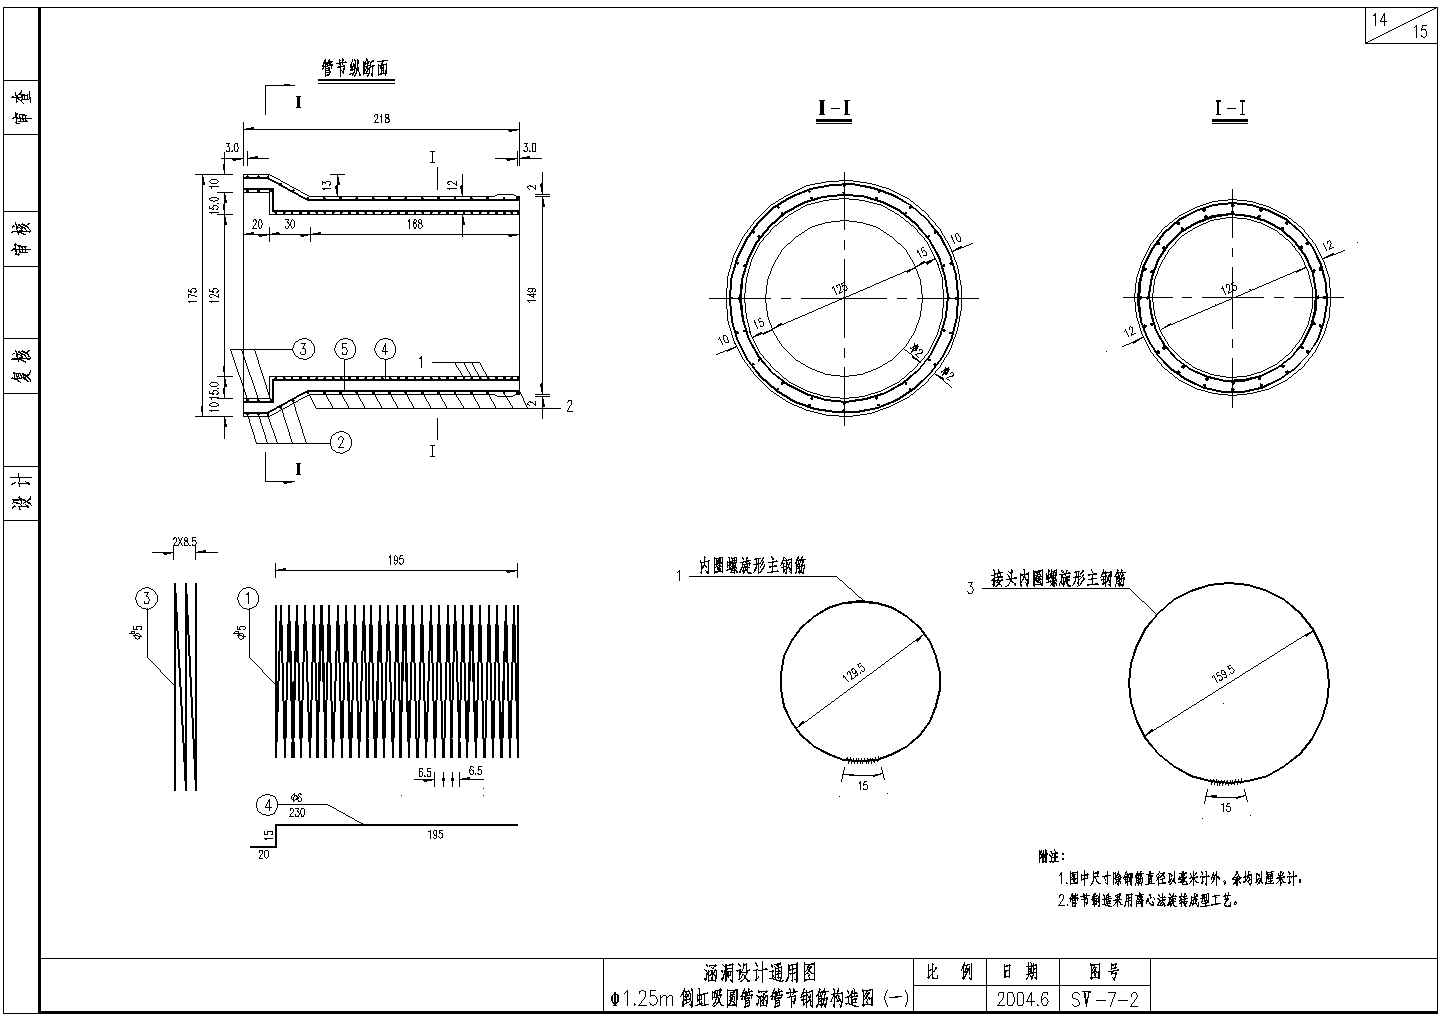 1.25m倒虹吸圆管涵管节设计图